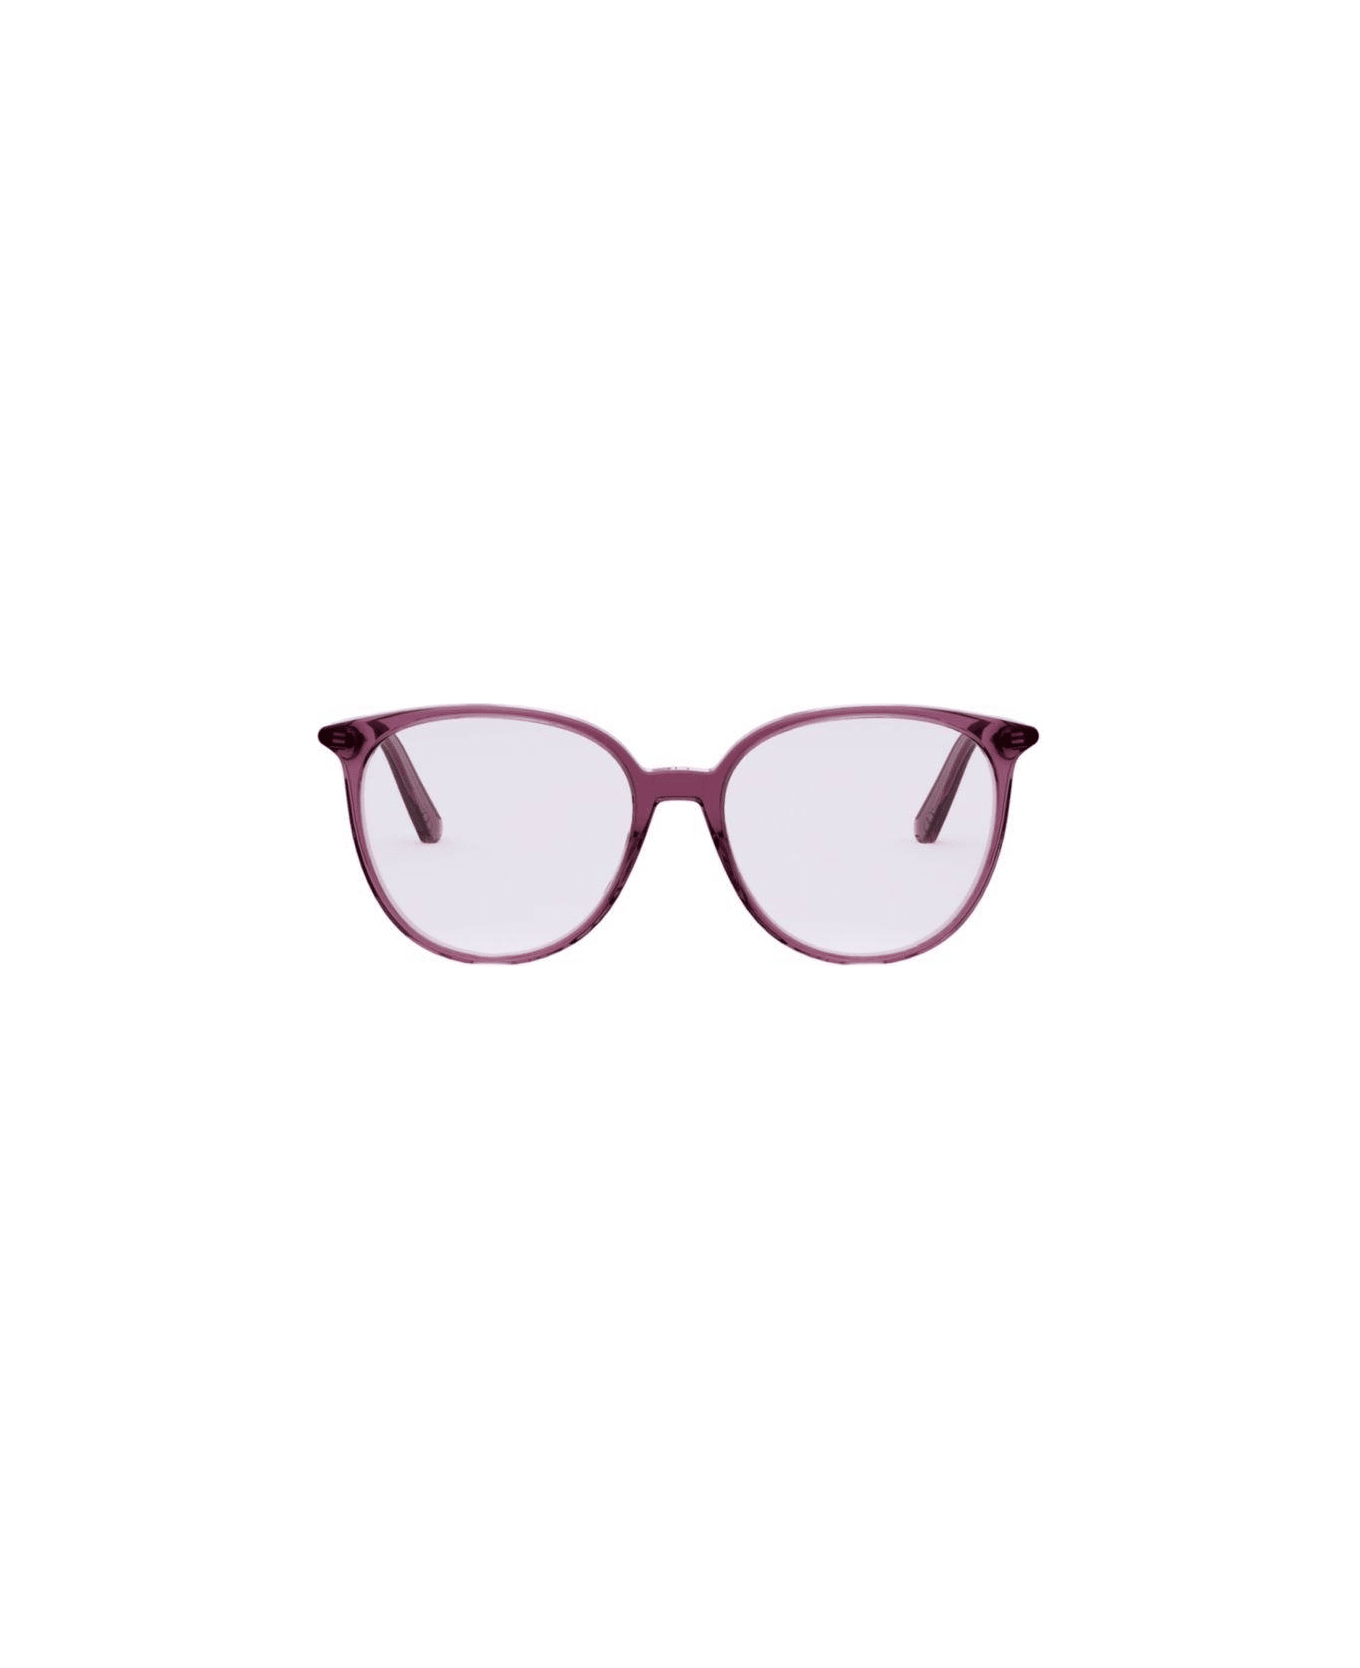 Dior Eyewear Round Frame Glasses - 3600 アイウェア